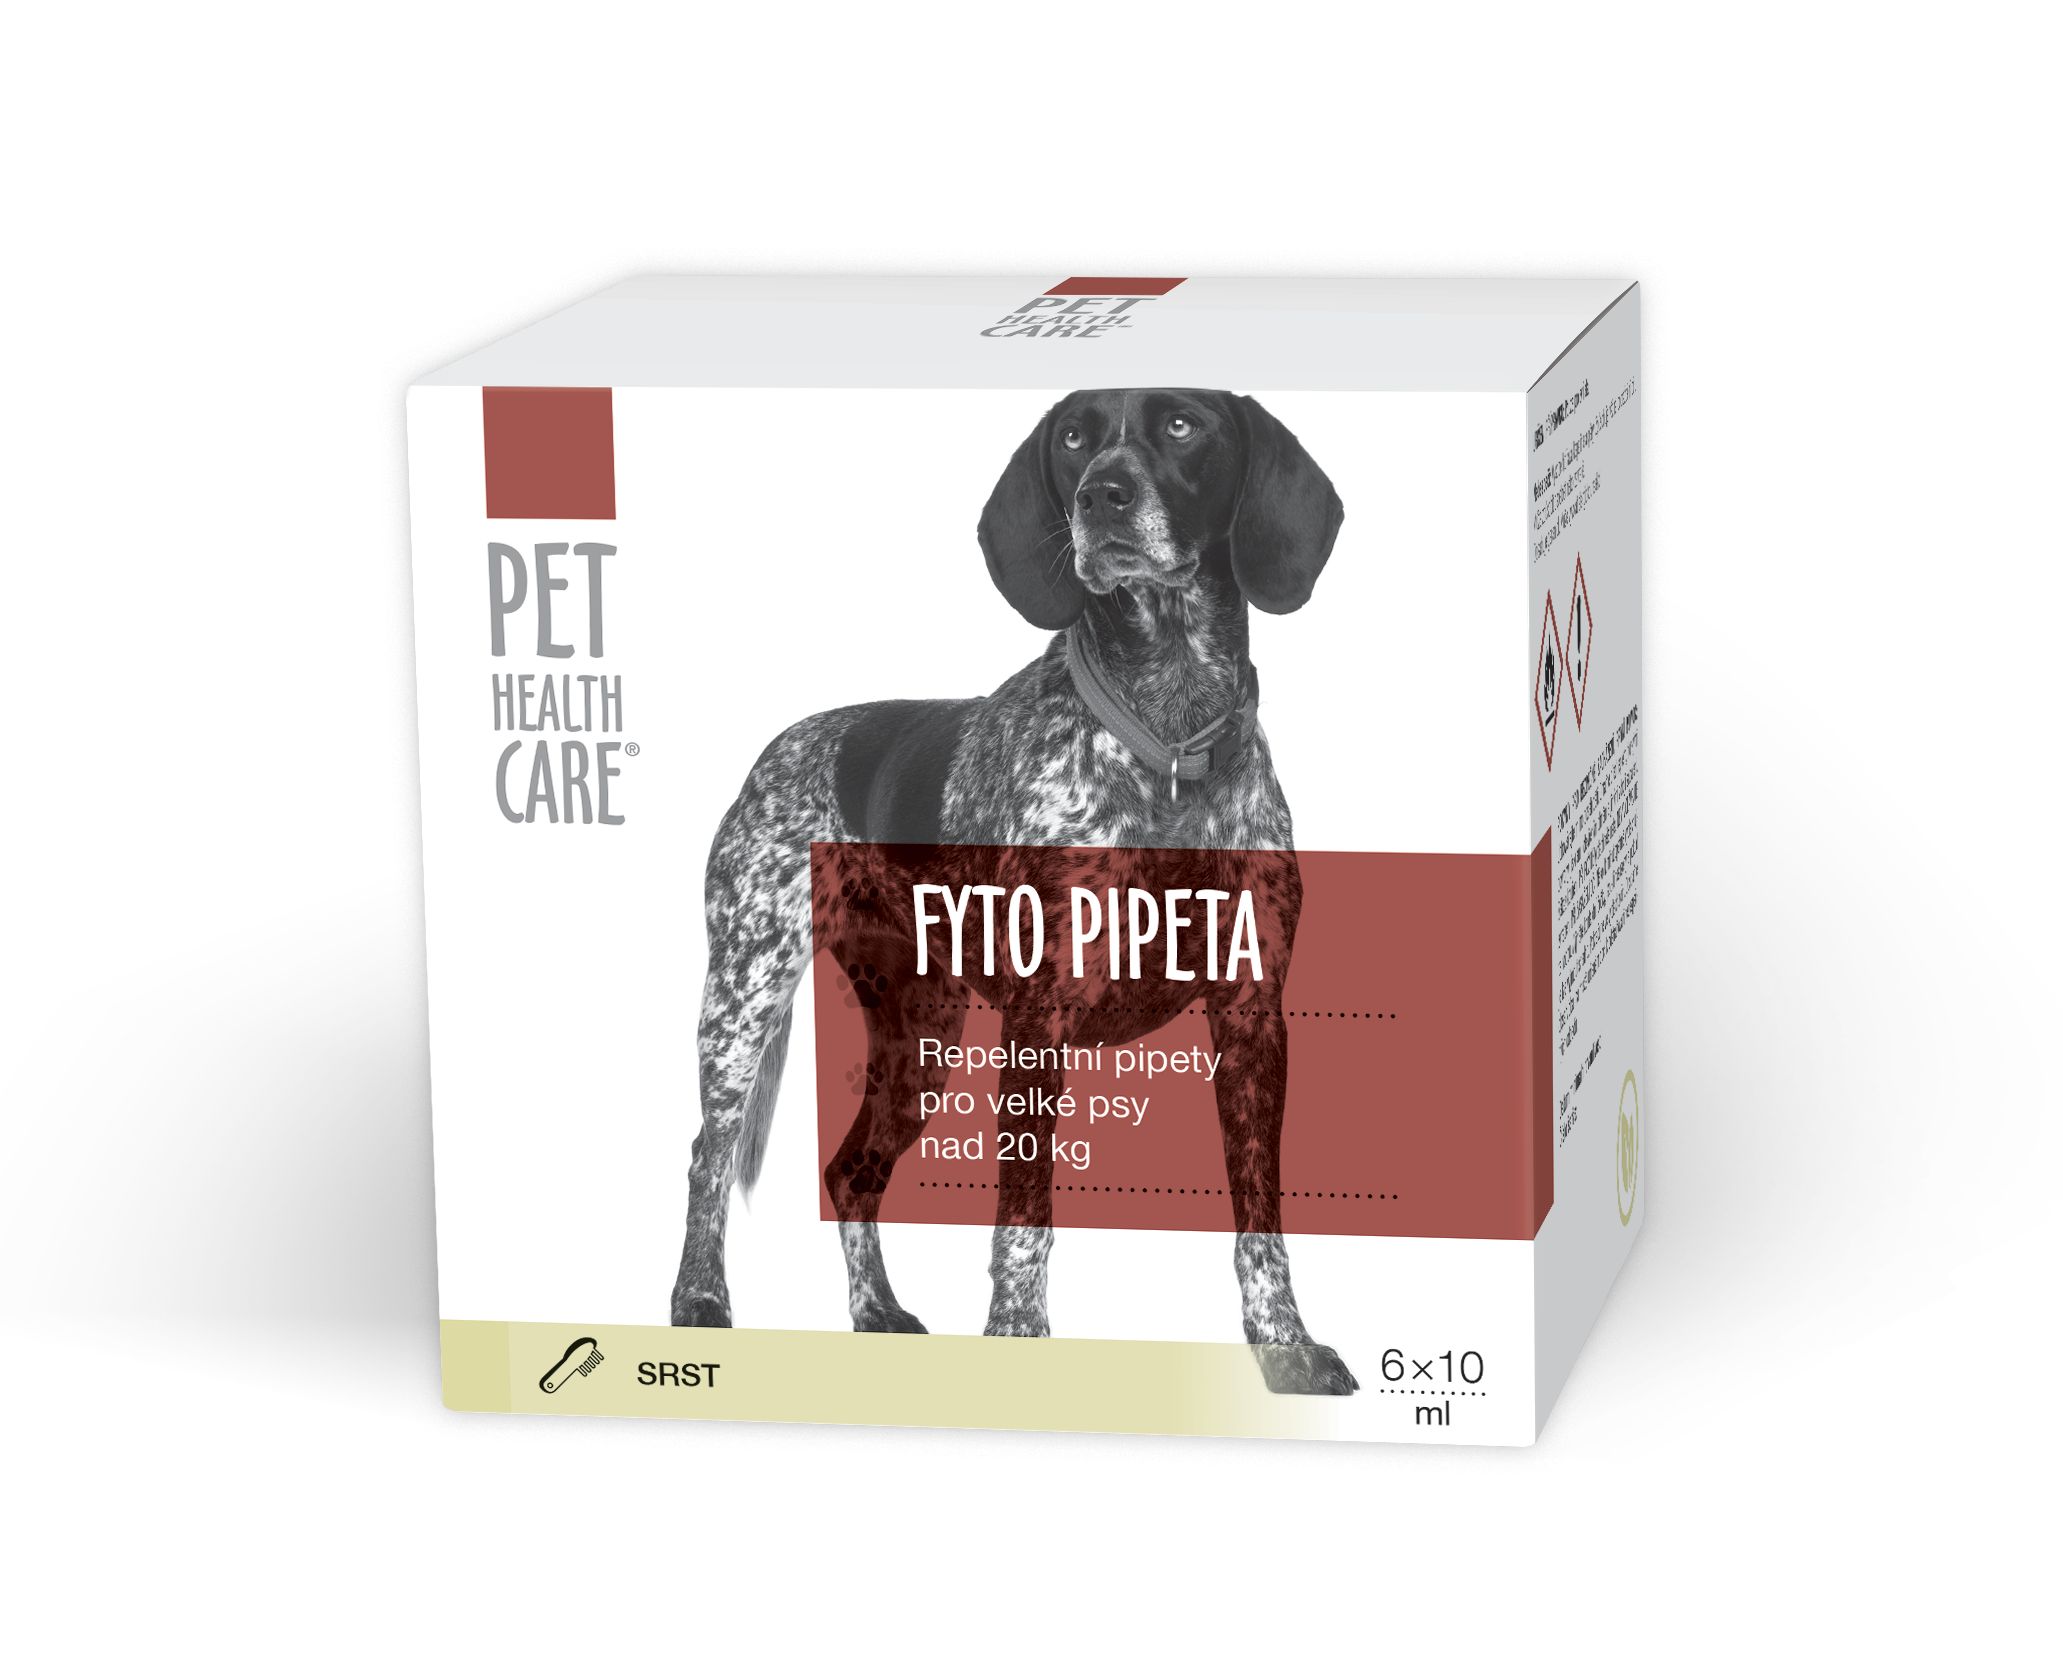 Pet health care Fytopipeta pes od 20 kg 6x10 ml Pet health care